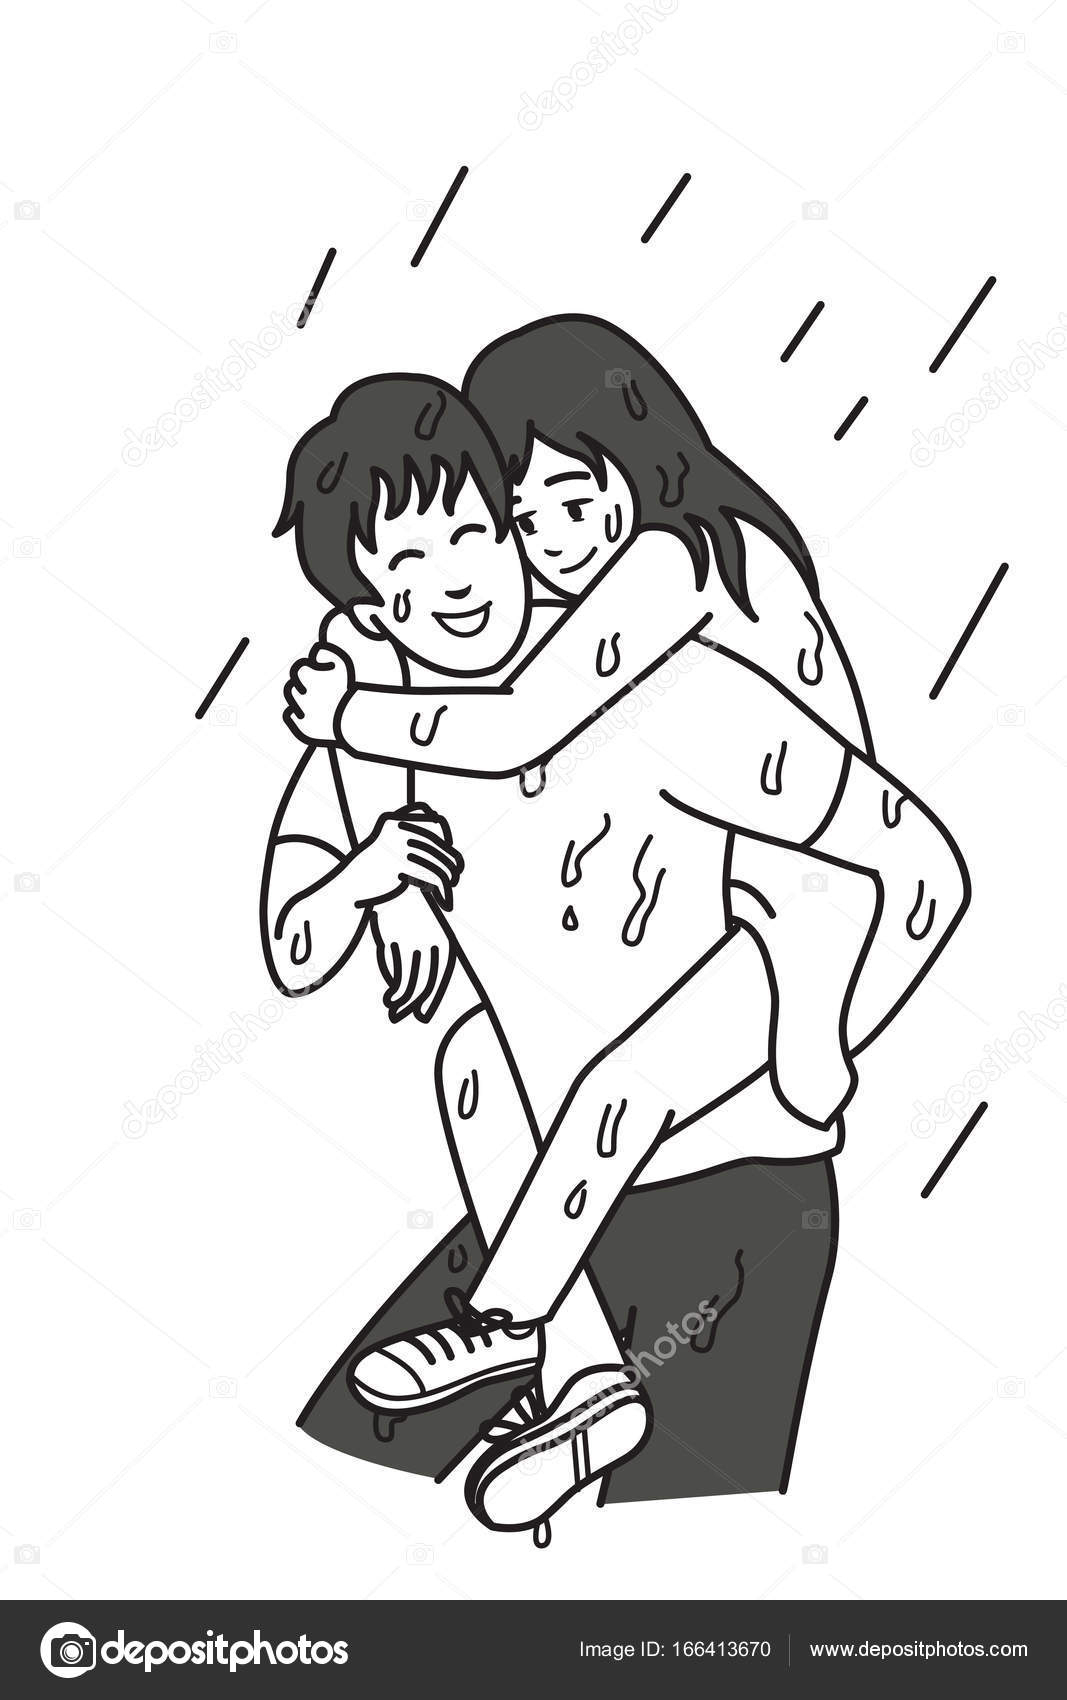 Drawings: Girlfriend And Boyfriend | Man Carry His regarding Relationship Drawings